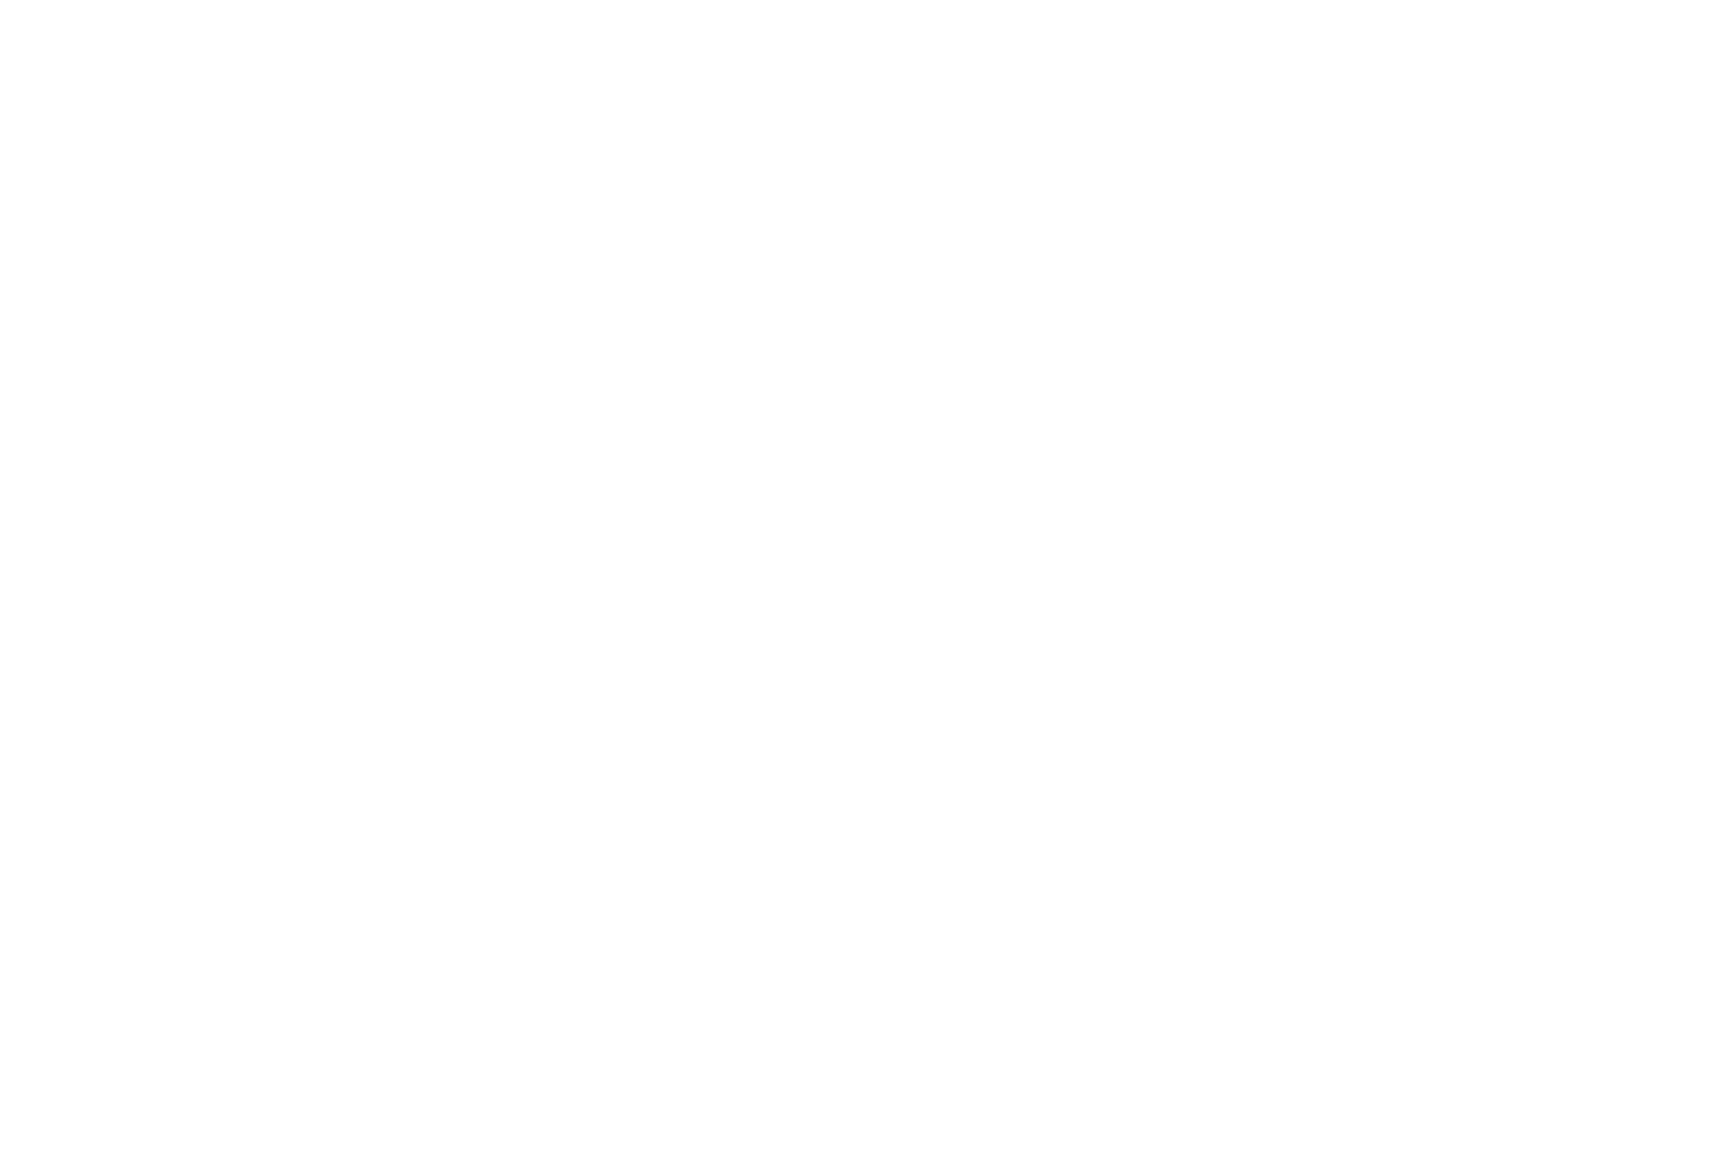 NOMINATED - BEST SHORT FILM  - LA CINEFEST 2016 (1).png